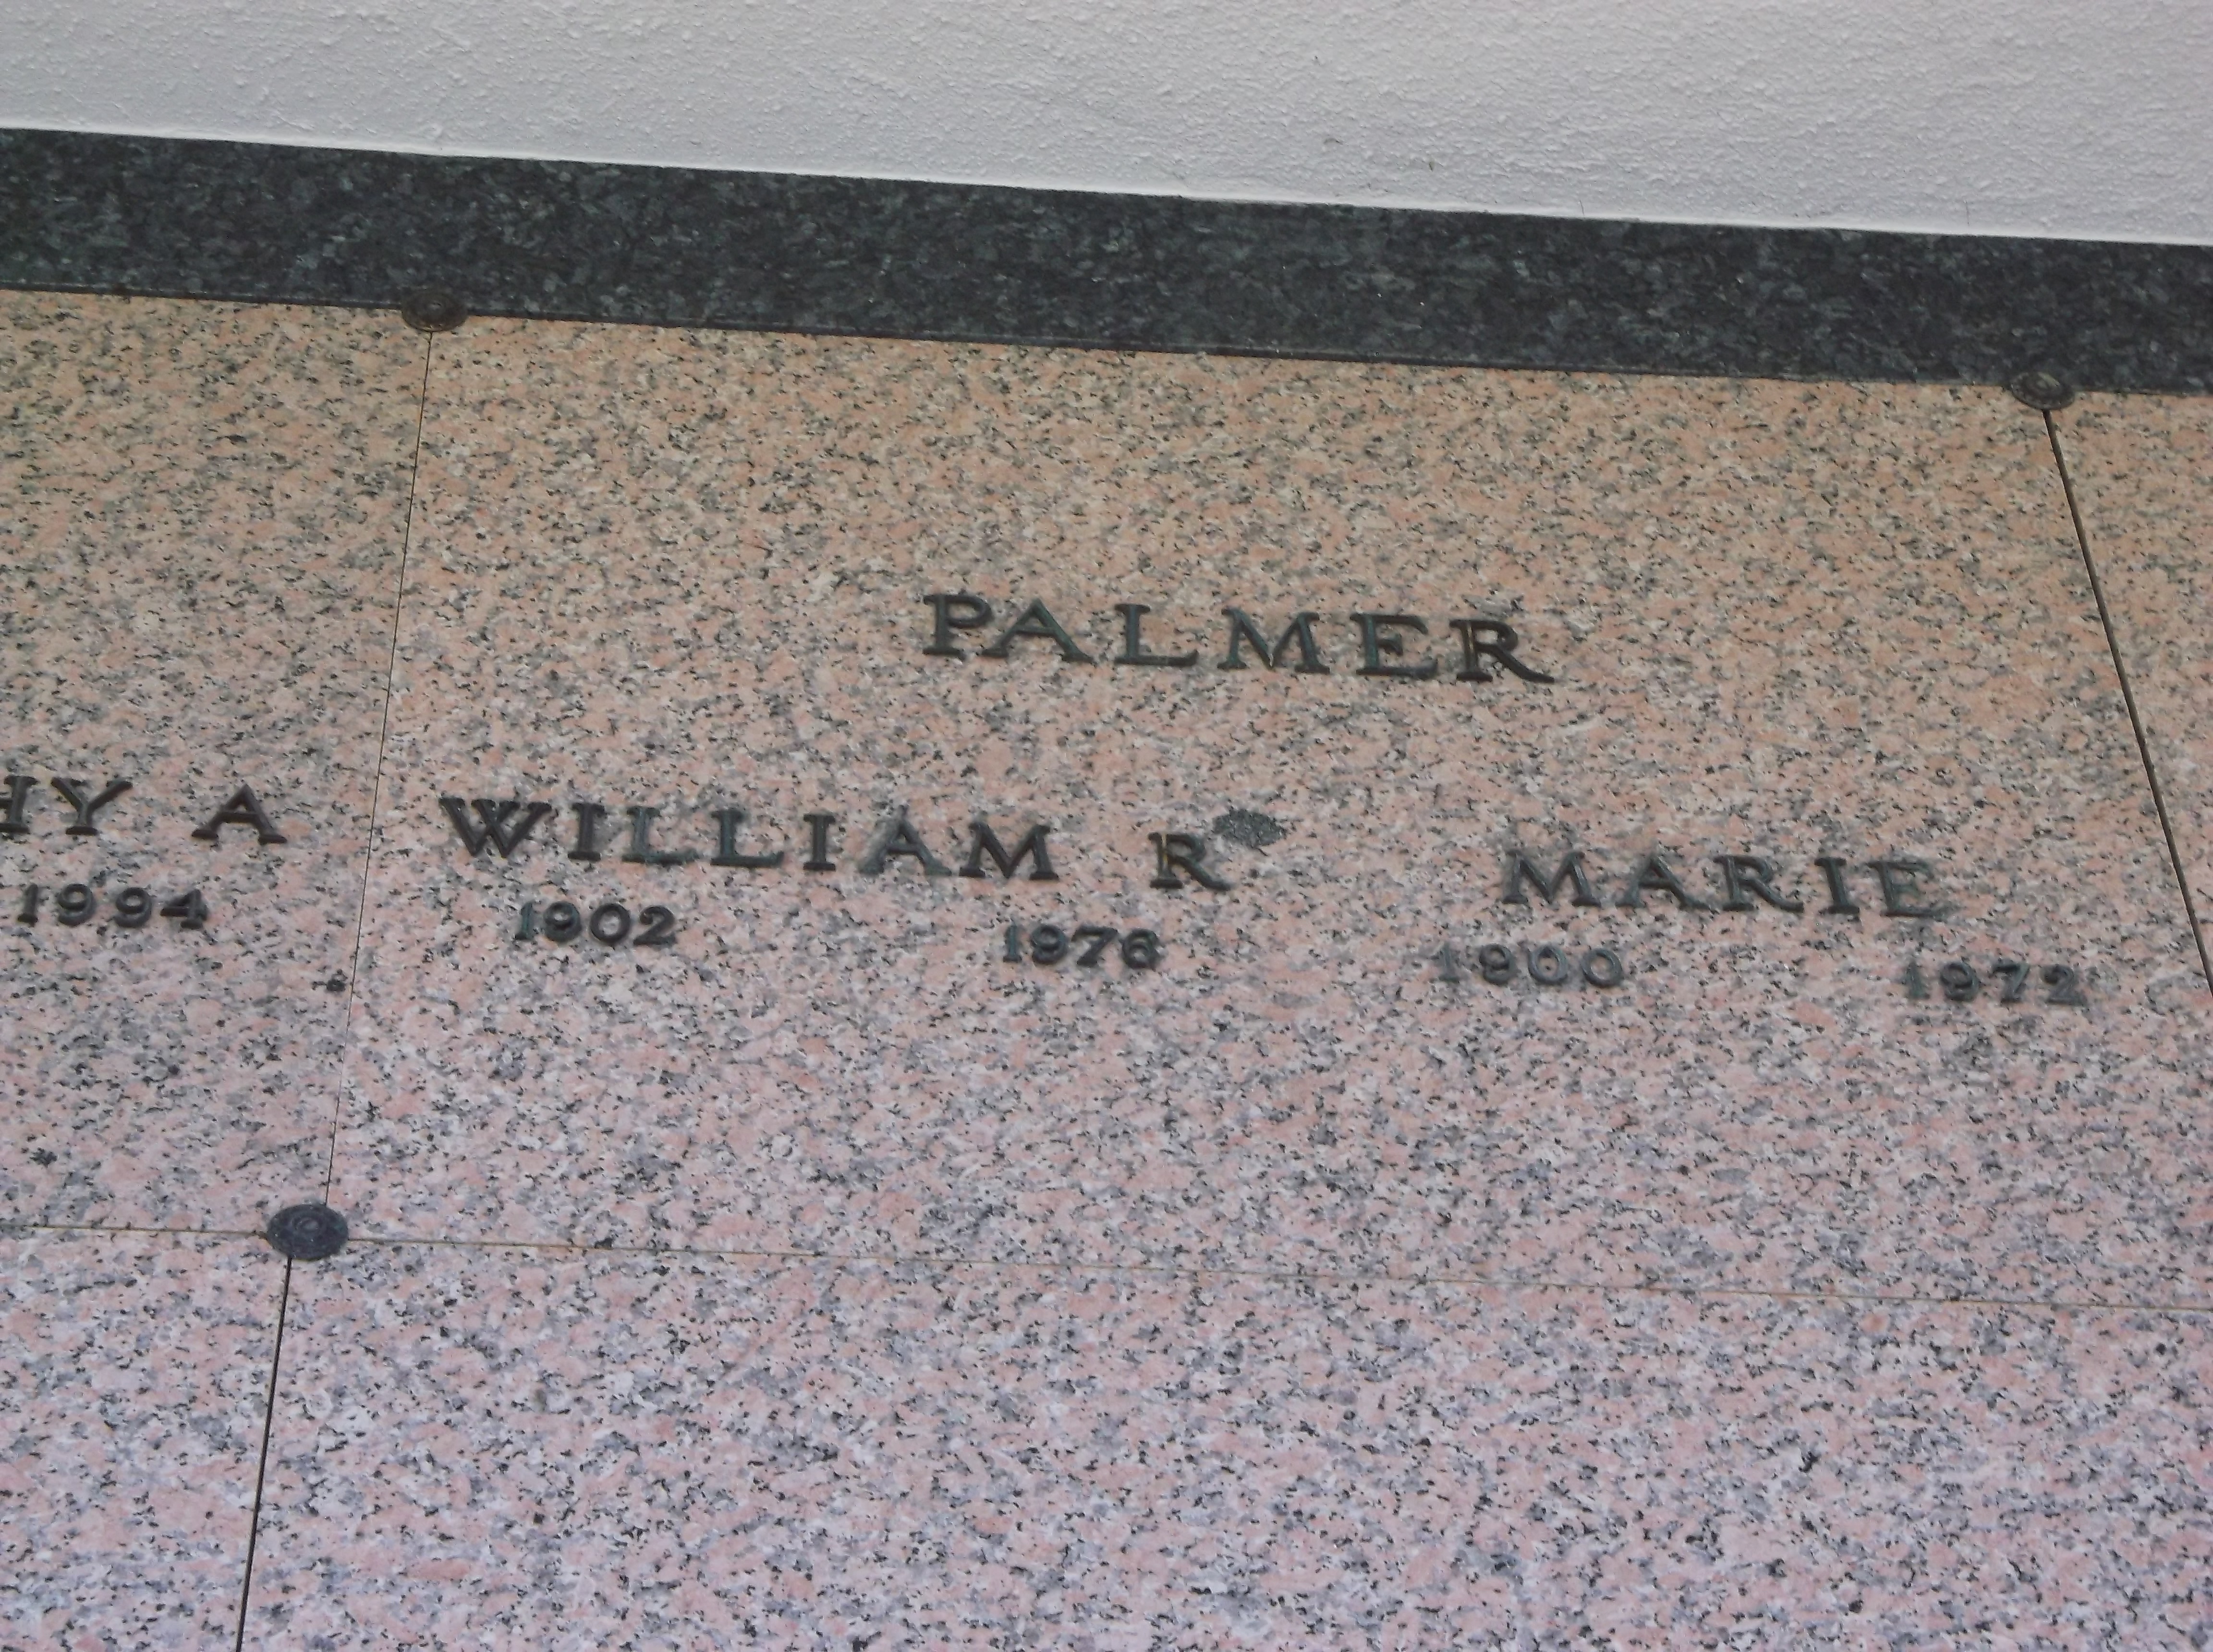 William R Palmer